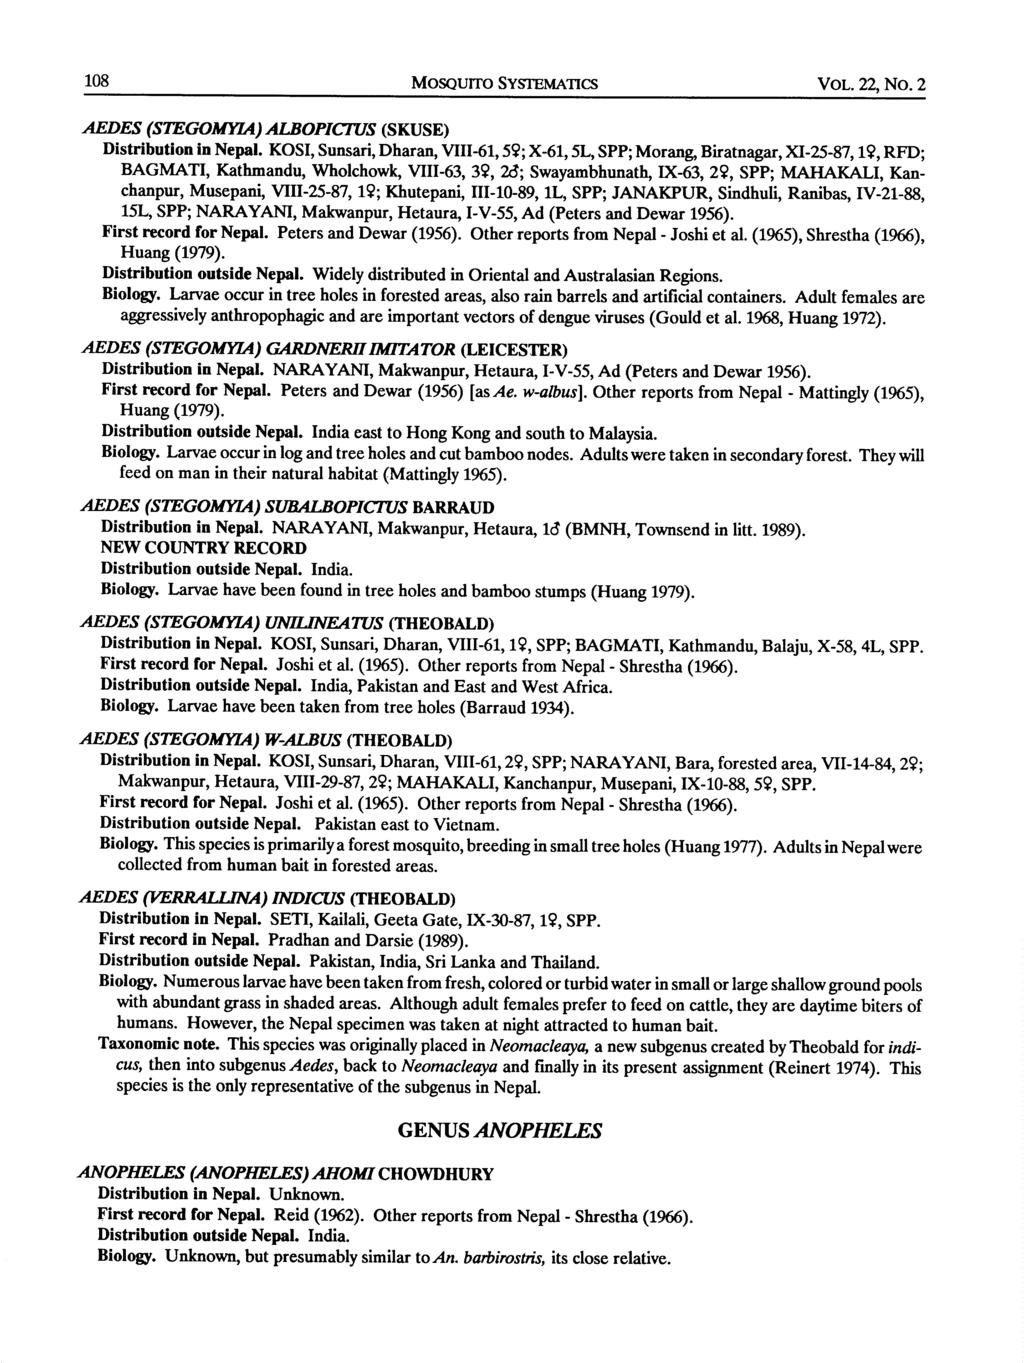 108 MOSQUITO SYSTEMATICS VOL. 22, No. 2 AEDES (SZEGOm) ALBOPICTUS (SKUSE) Distribution in Nepal. KOSI, Sunsari, Dharan, VIII-61,5?; X-61,5L, SPP; Morang, Biratnagar, XI-25-87,1?